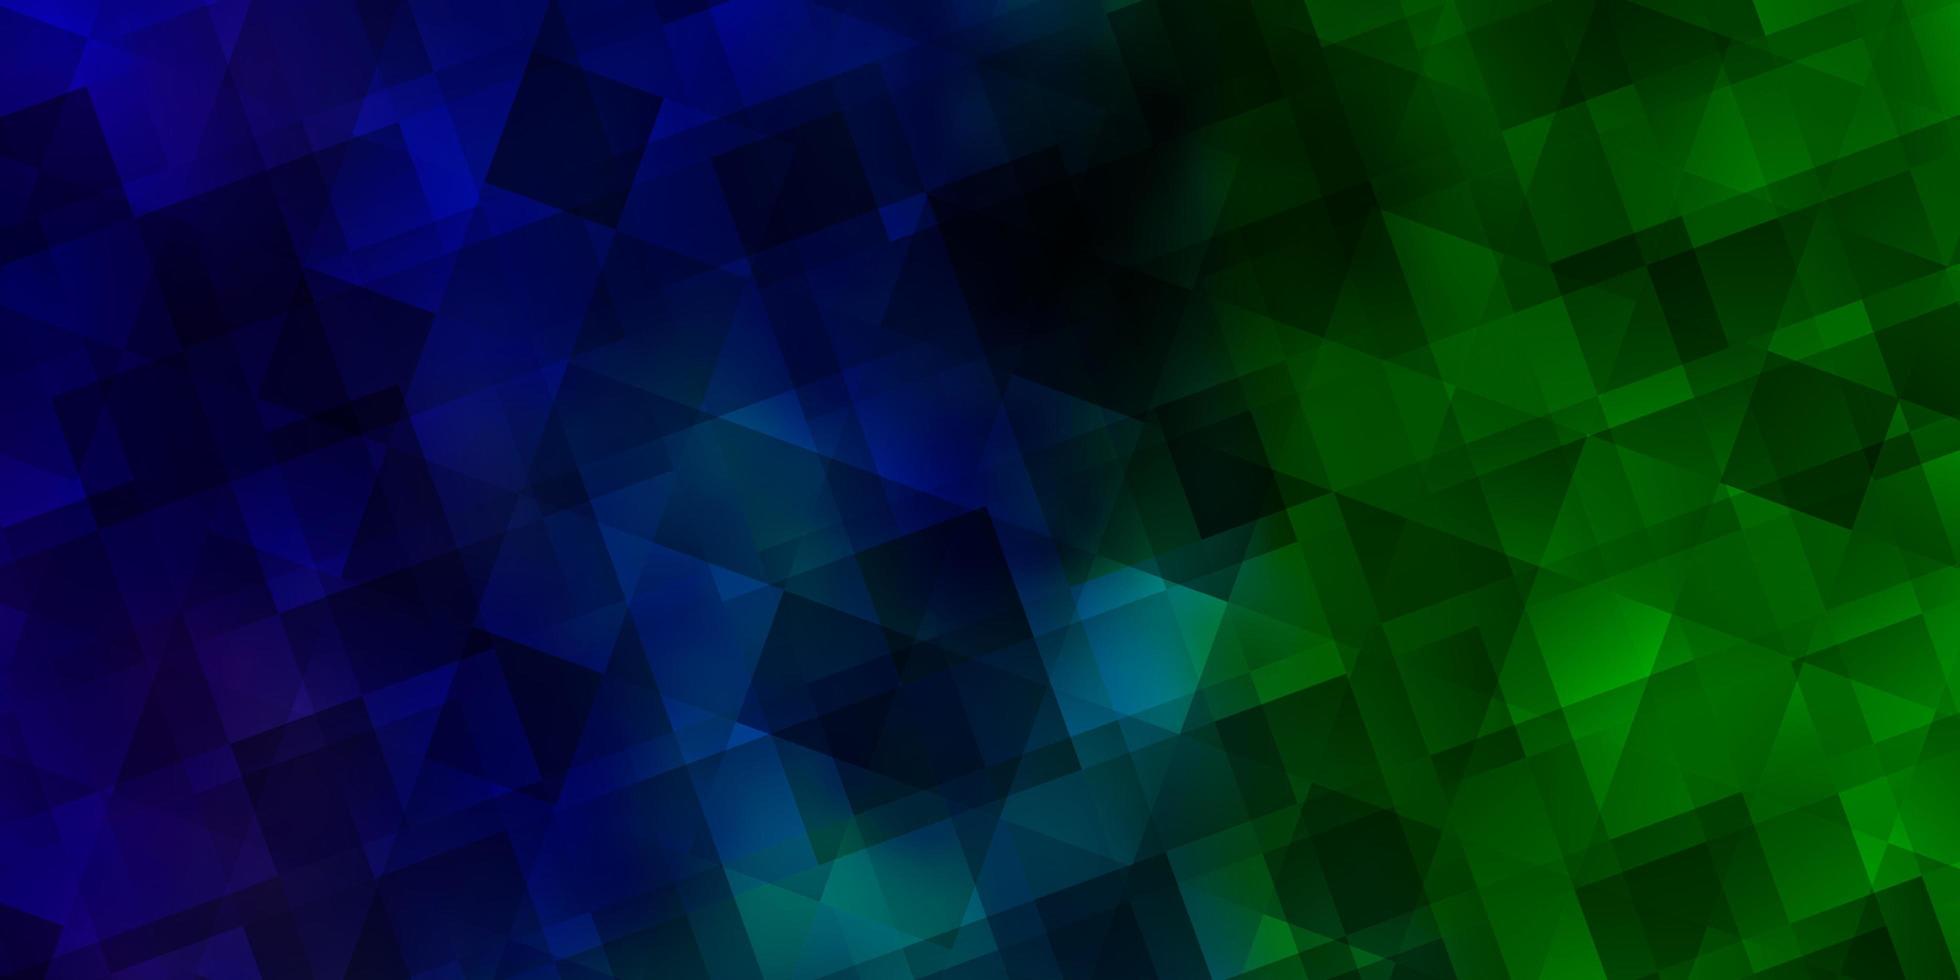 fond de vecteur bleu clair, vert avec un style polygonal.